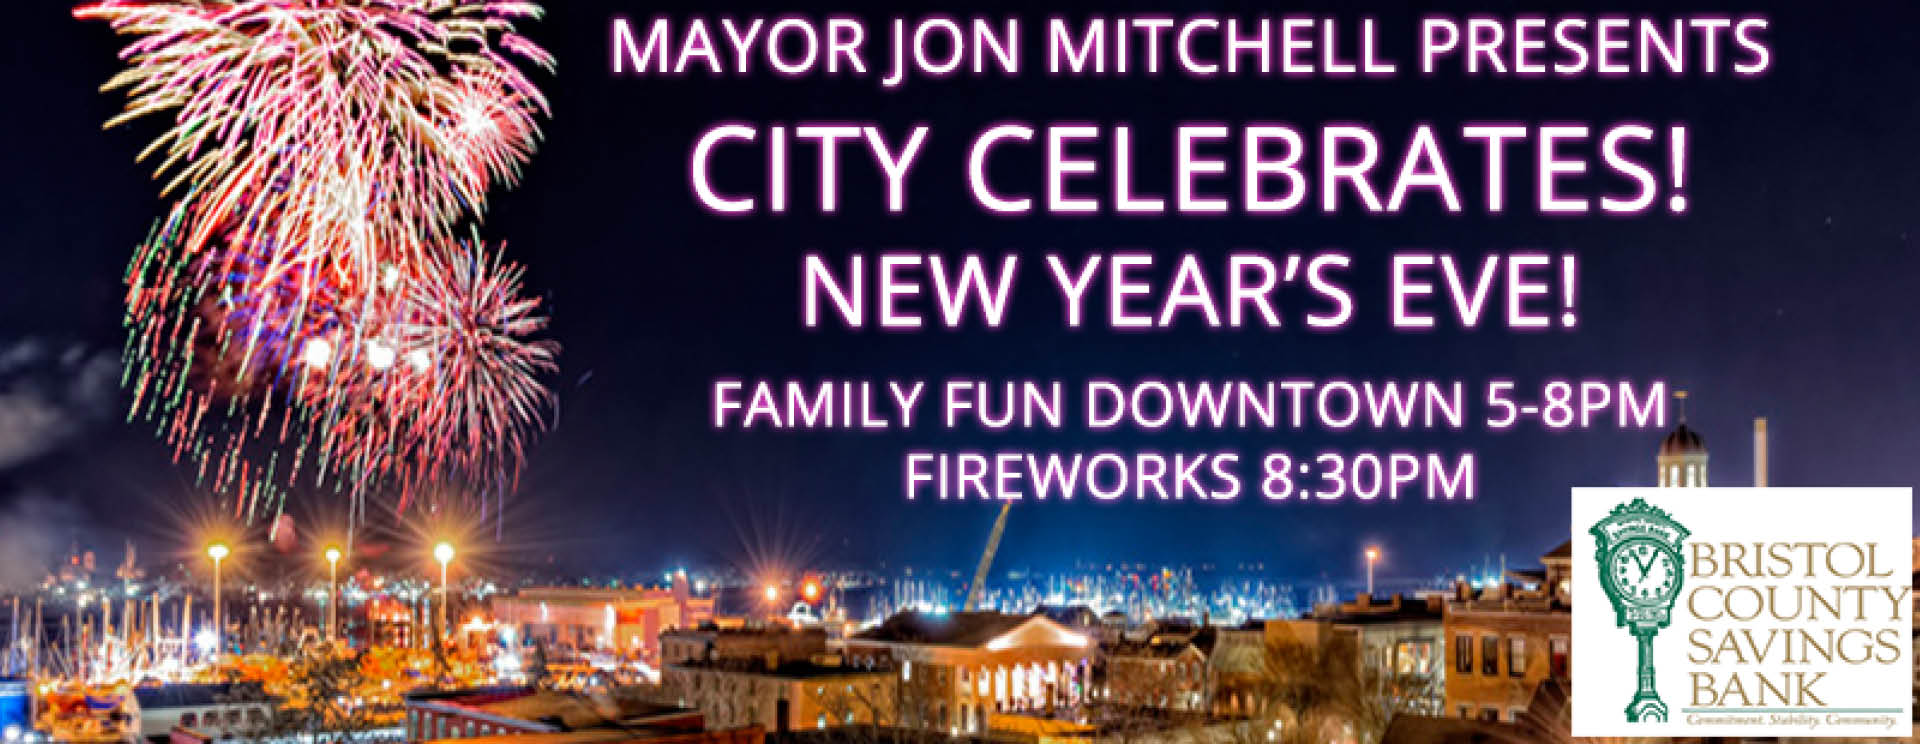 City Celebrates! New Year's Eve! Destination New Bedford